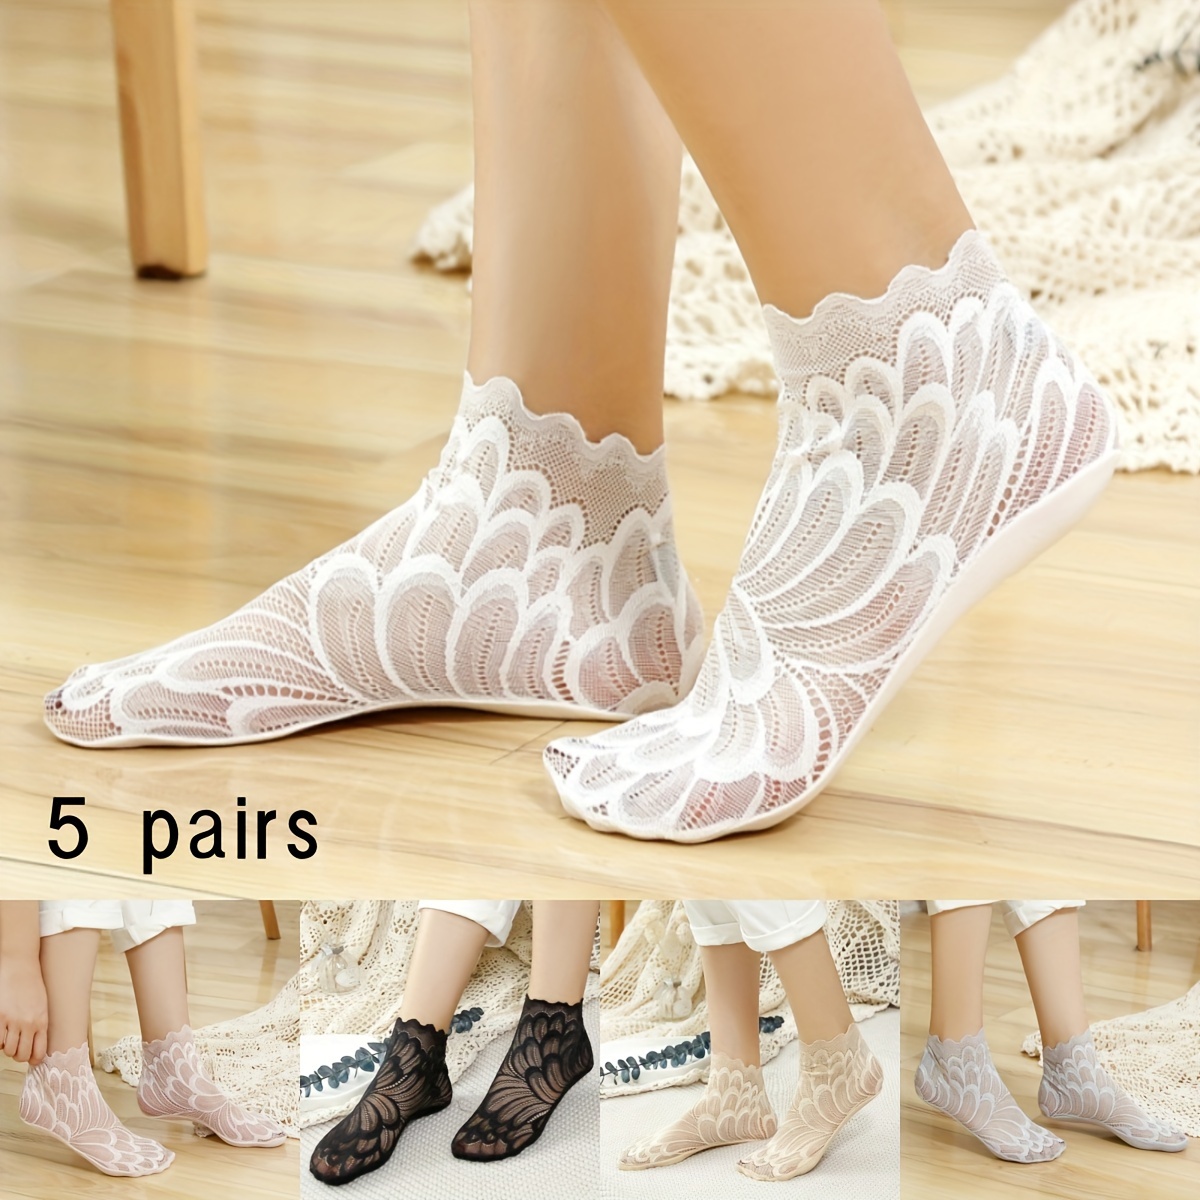 

5 Pairs Floral Lace Mesh Socks, Cute & Breathable Short Socks, Women's Stockings & Hosiery